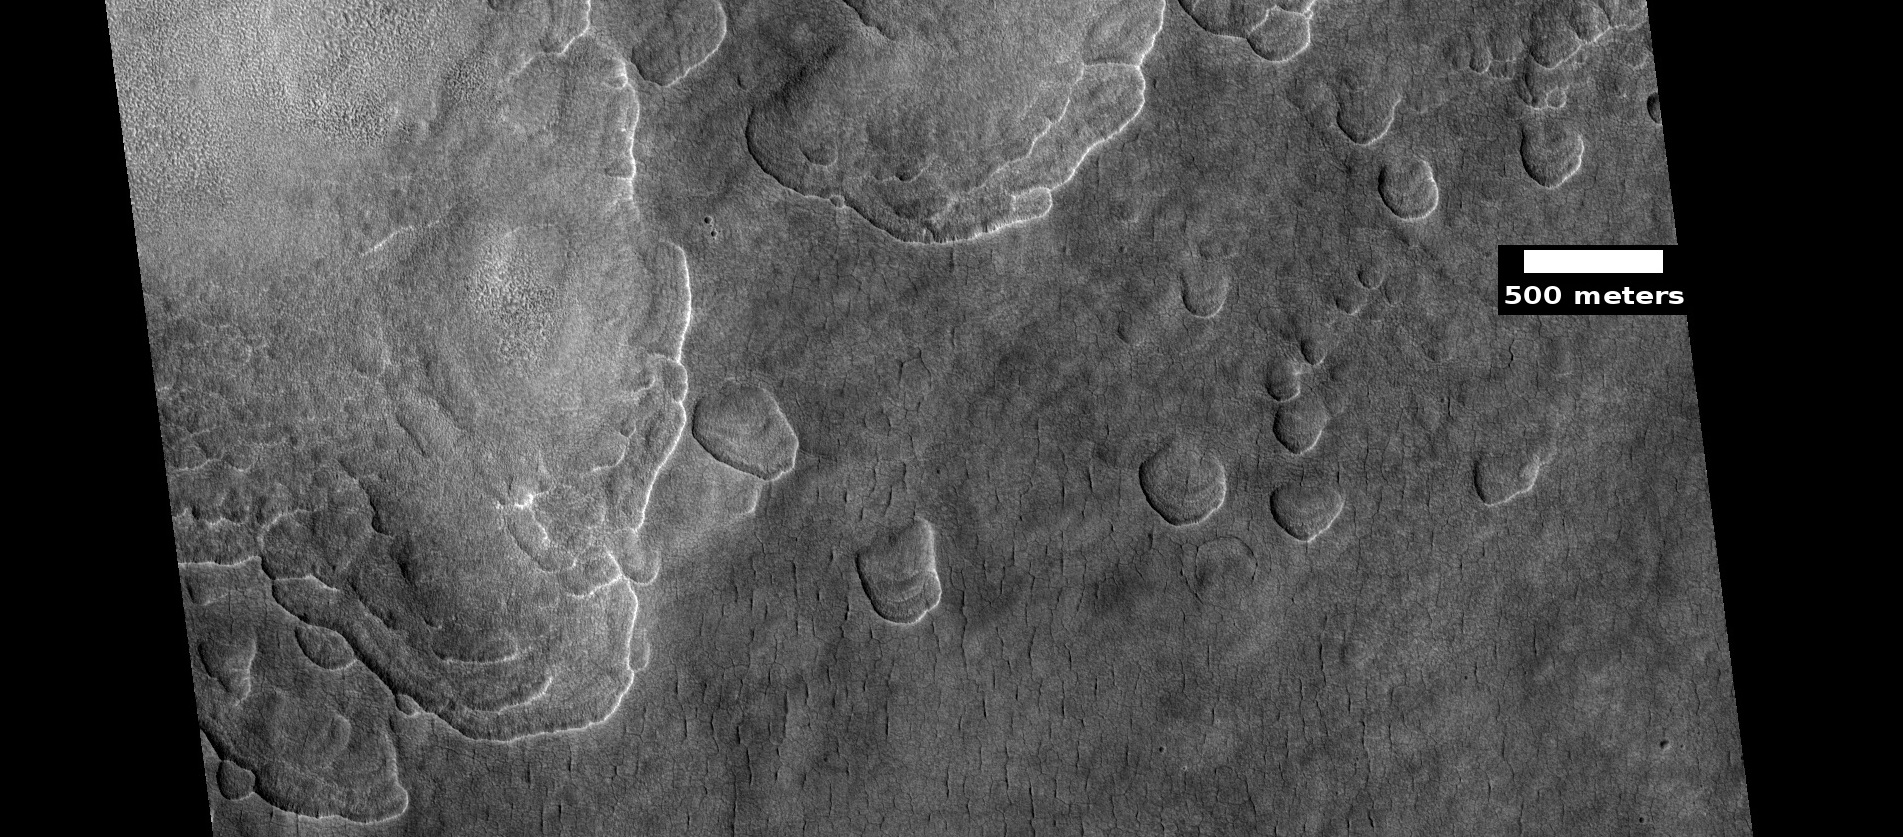 Scalloped ground, as seen by HiRISE under HiWish program